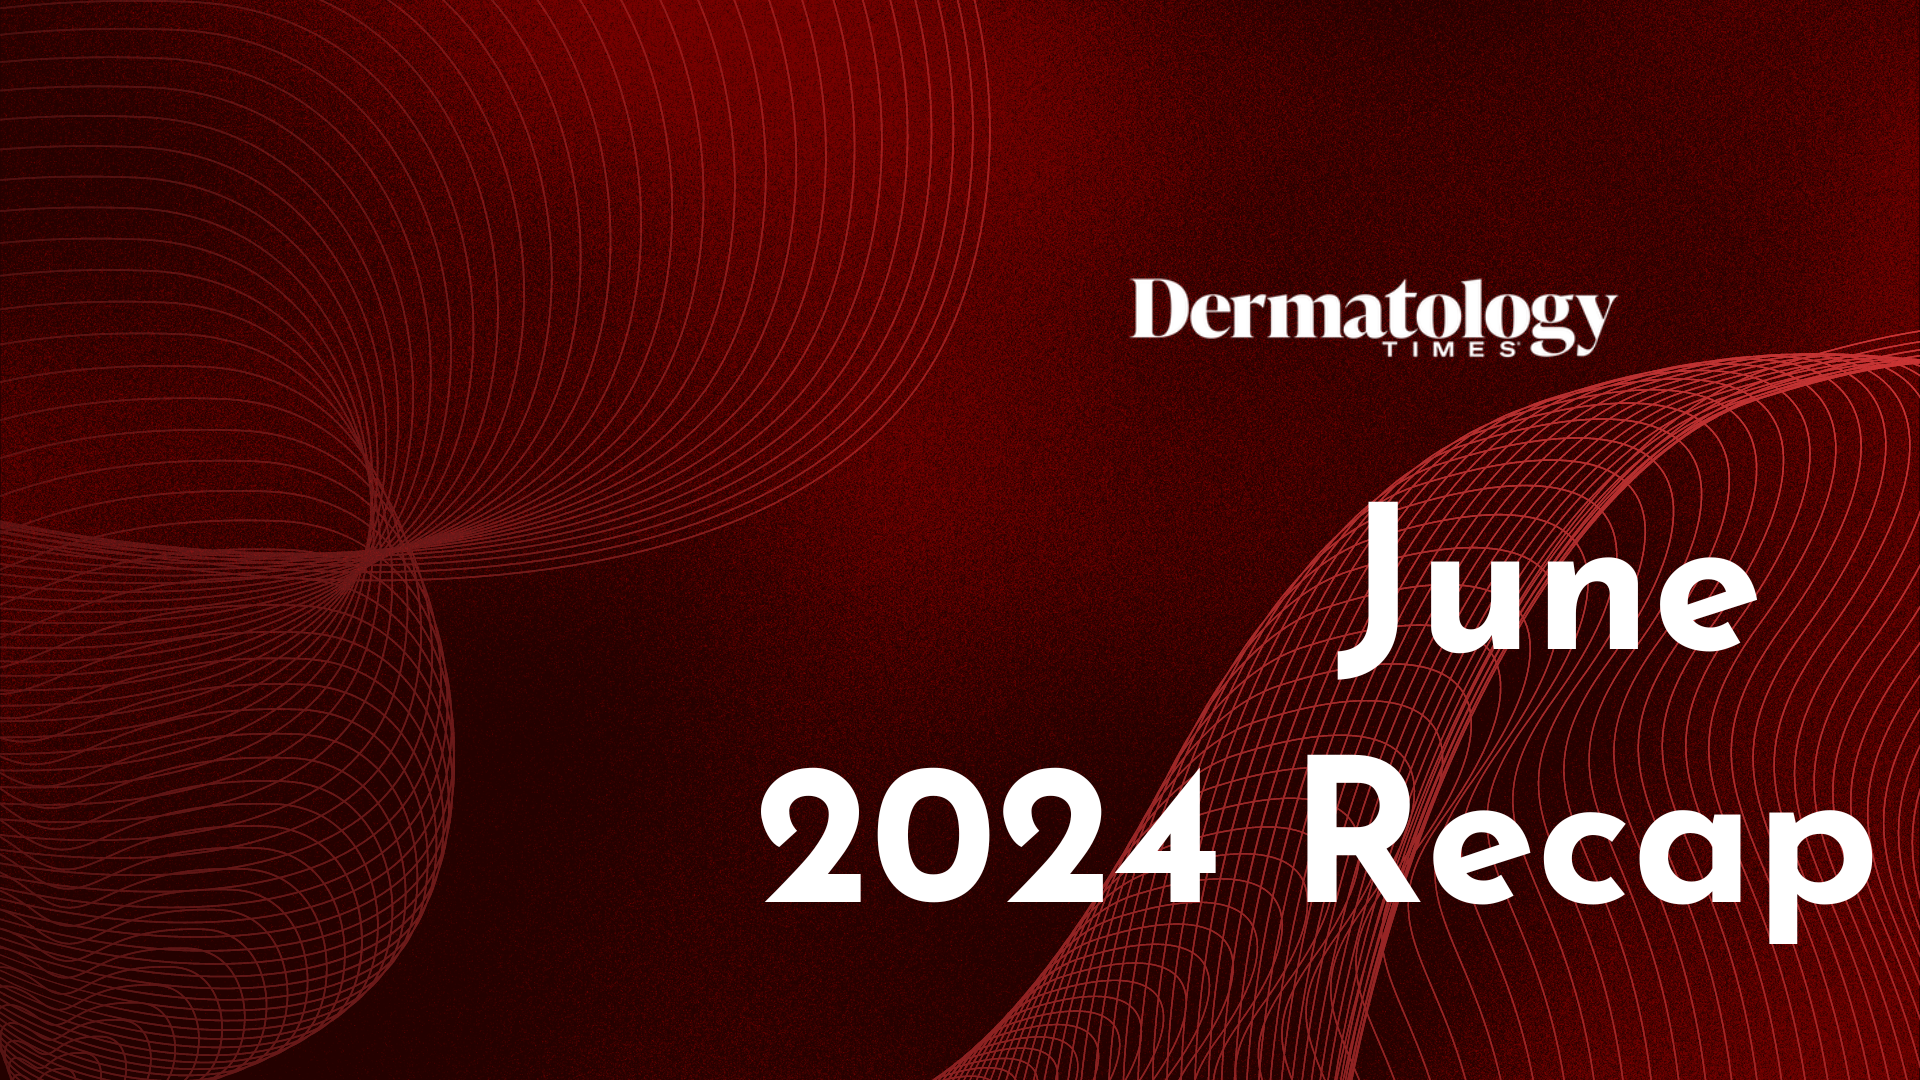 Dermatology Times June 2024 recap logo